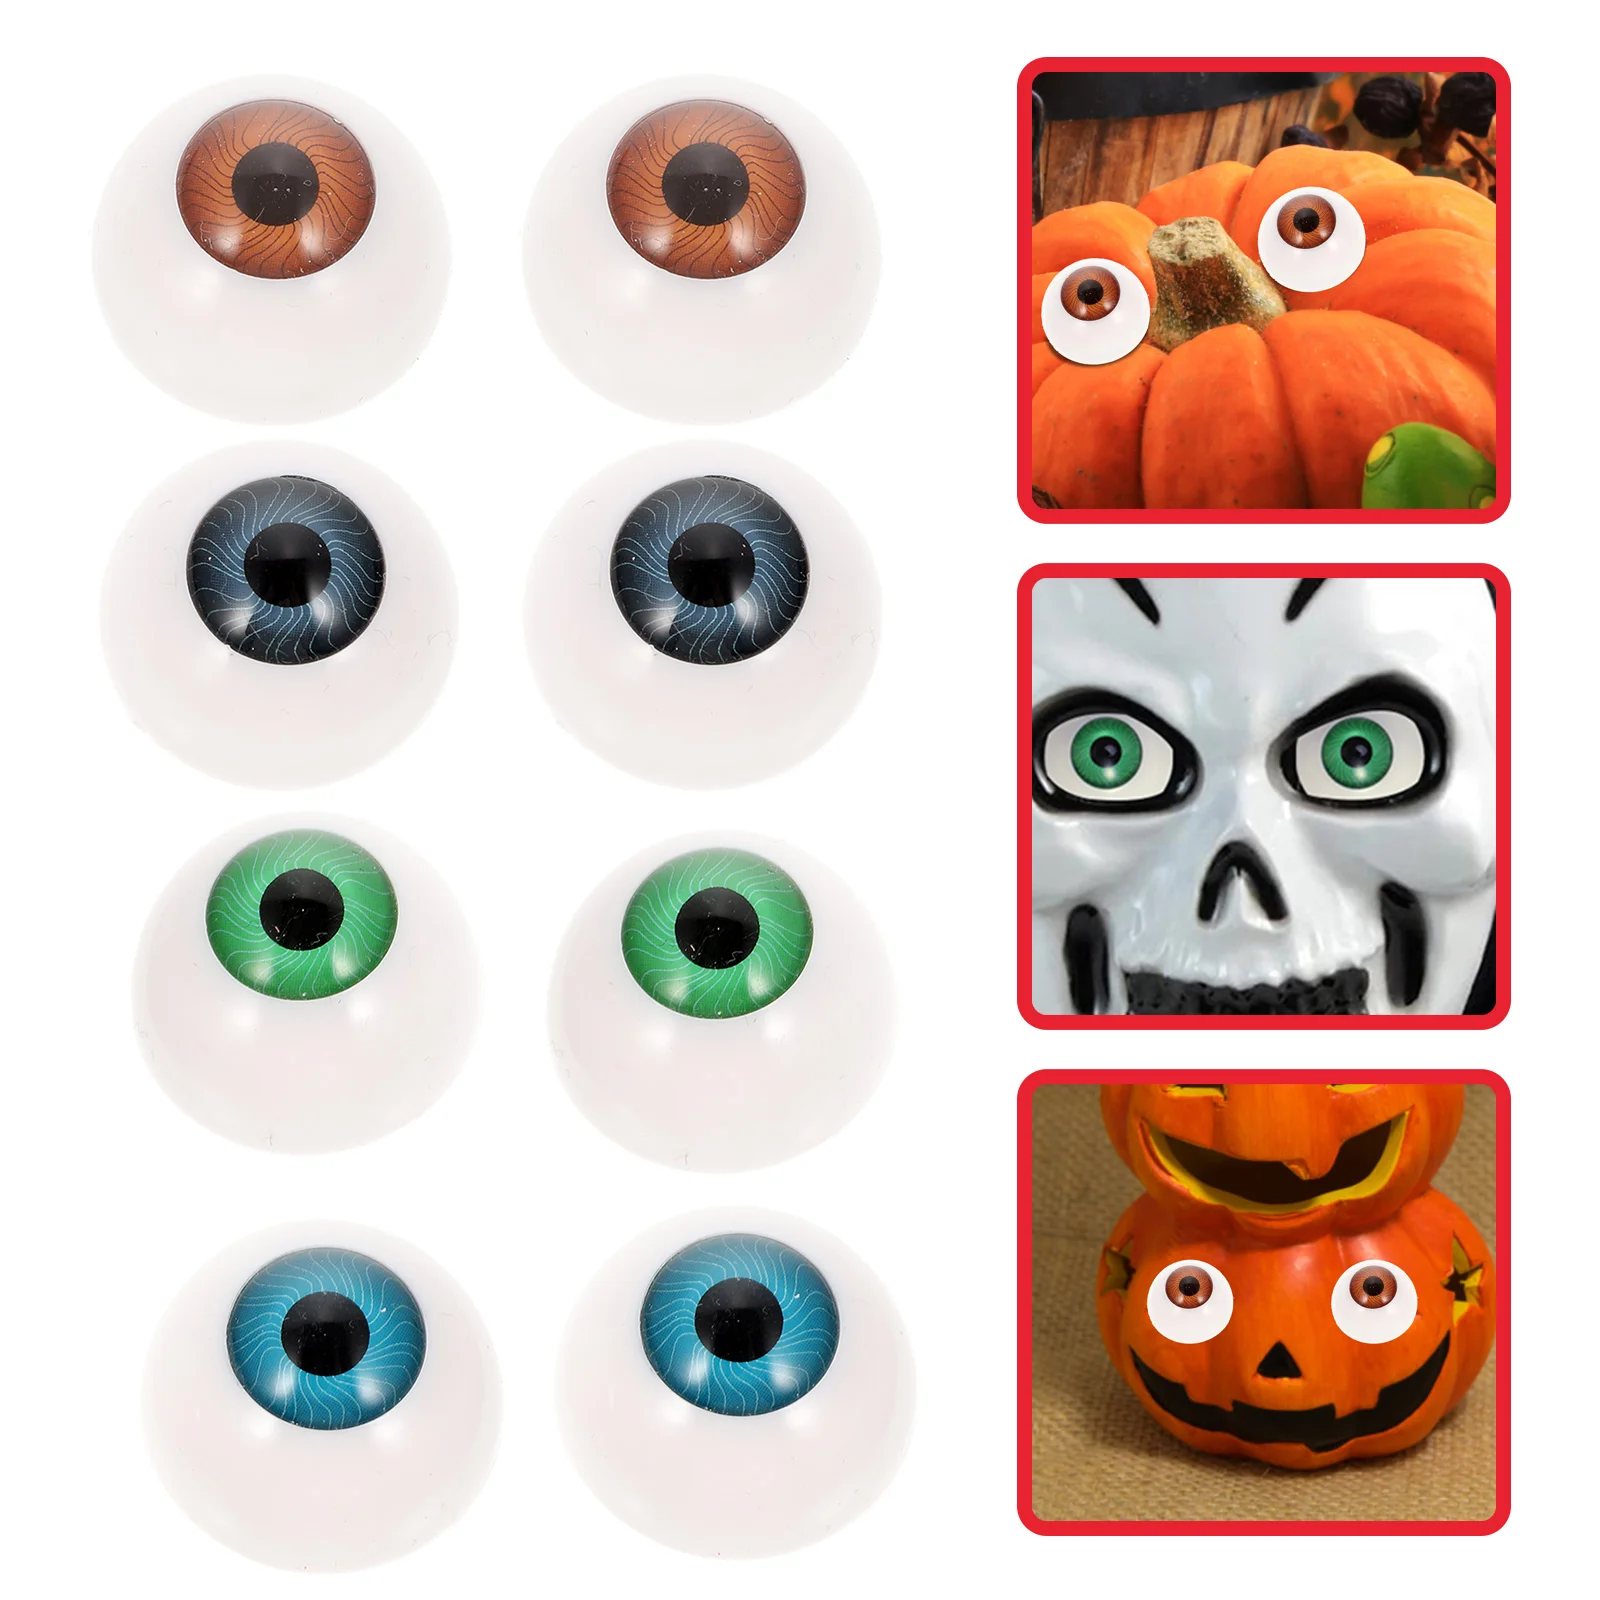 Toyandona Plastic Accessory Accessory Fake Accessory Half Round Acrylic Eyes Diy Crafts Halloween Props